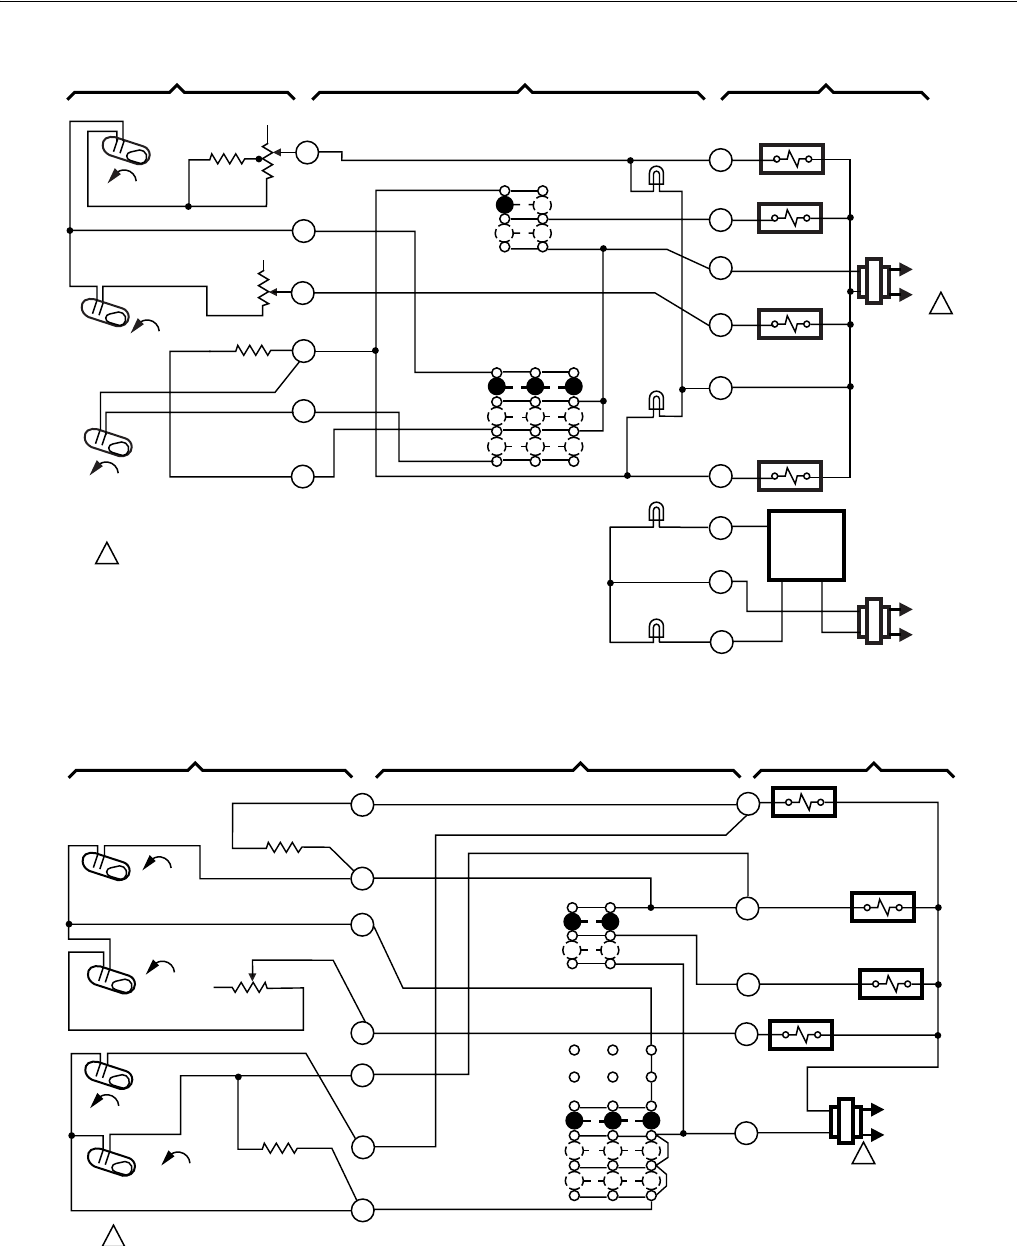 simple comfort 2200 wiring diagram